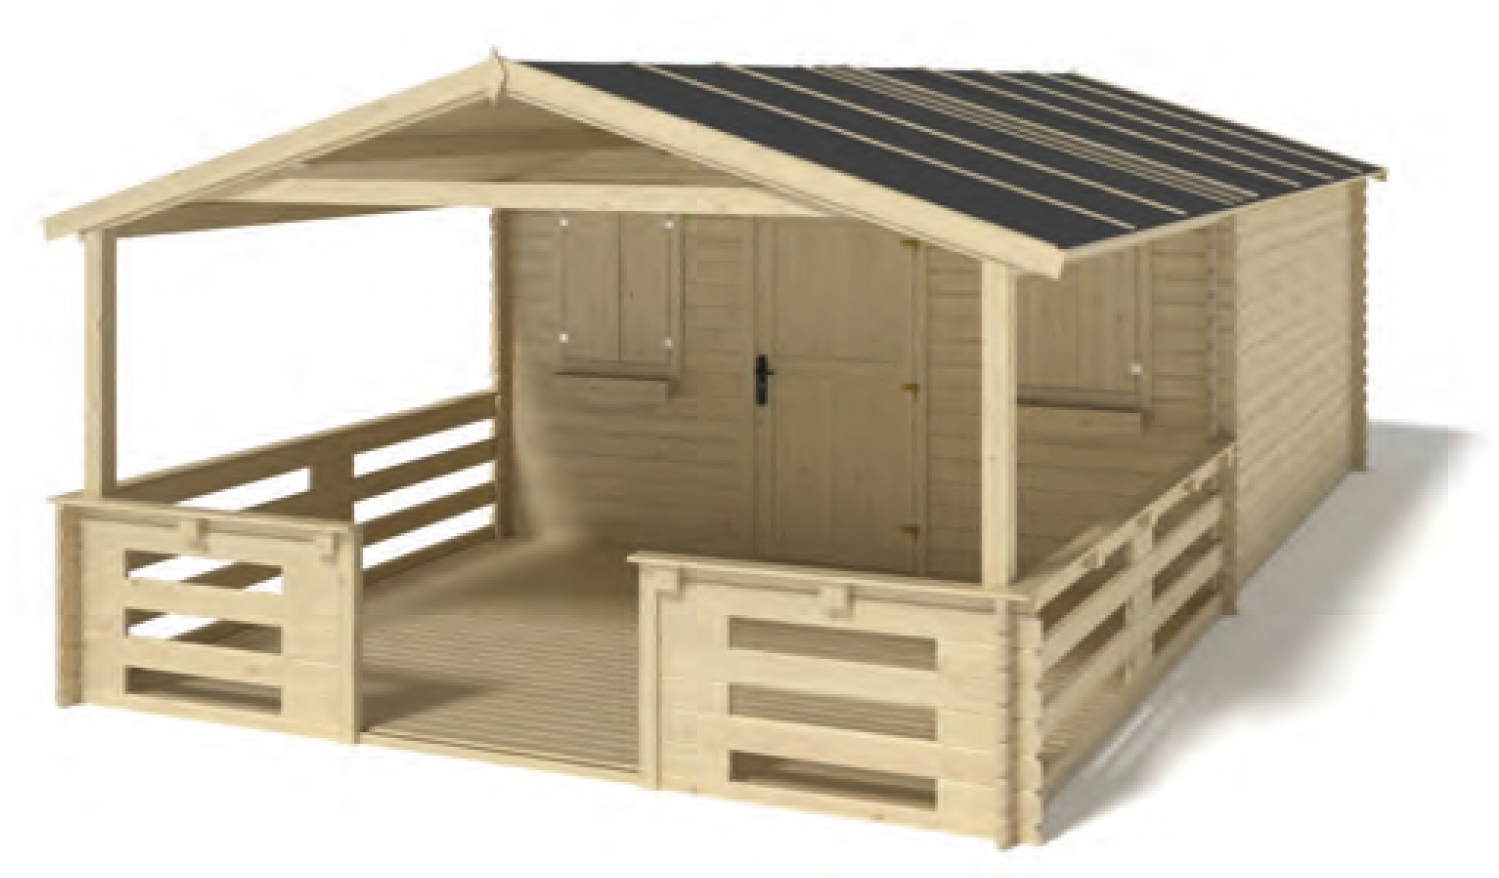 Alps Garden Shelter with porch option 400 x 300 x 250 cm